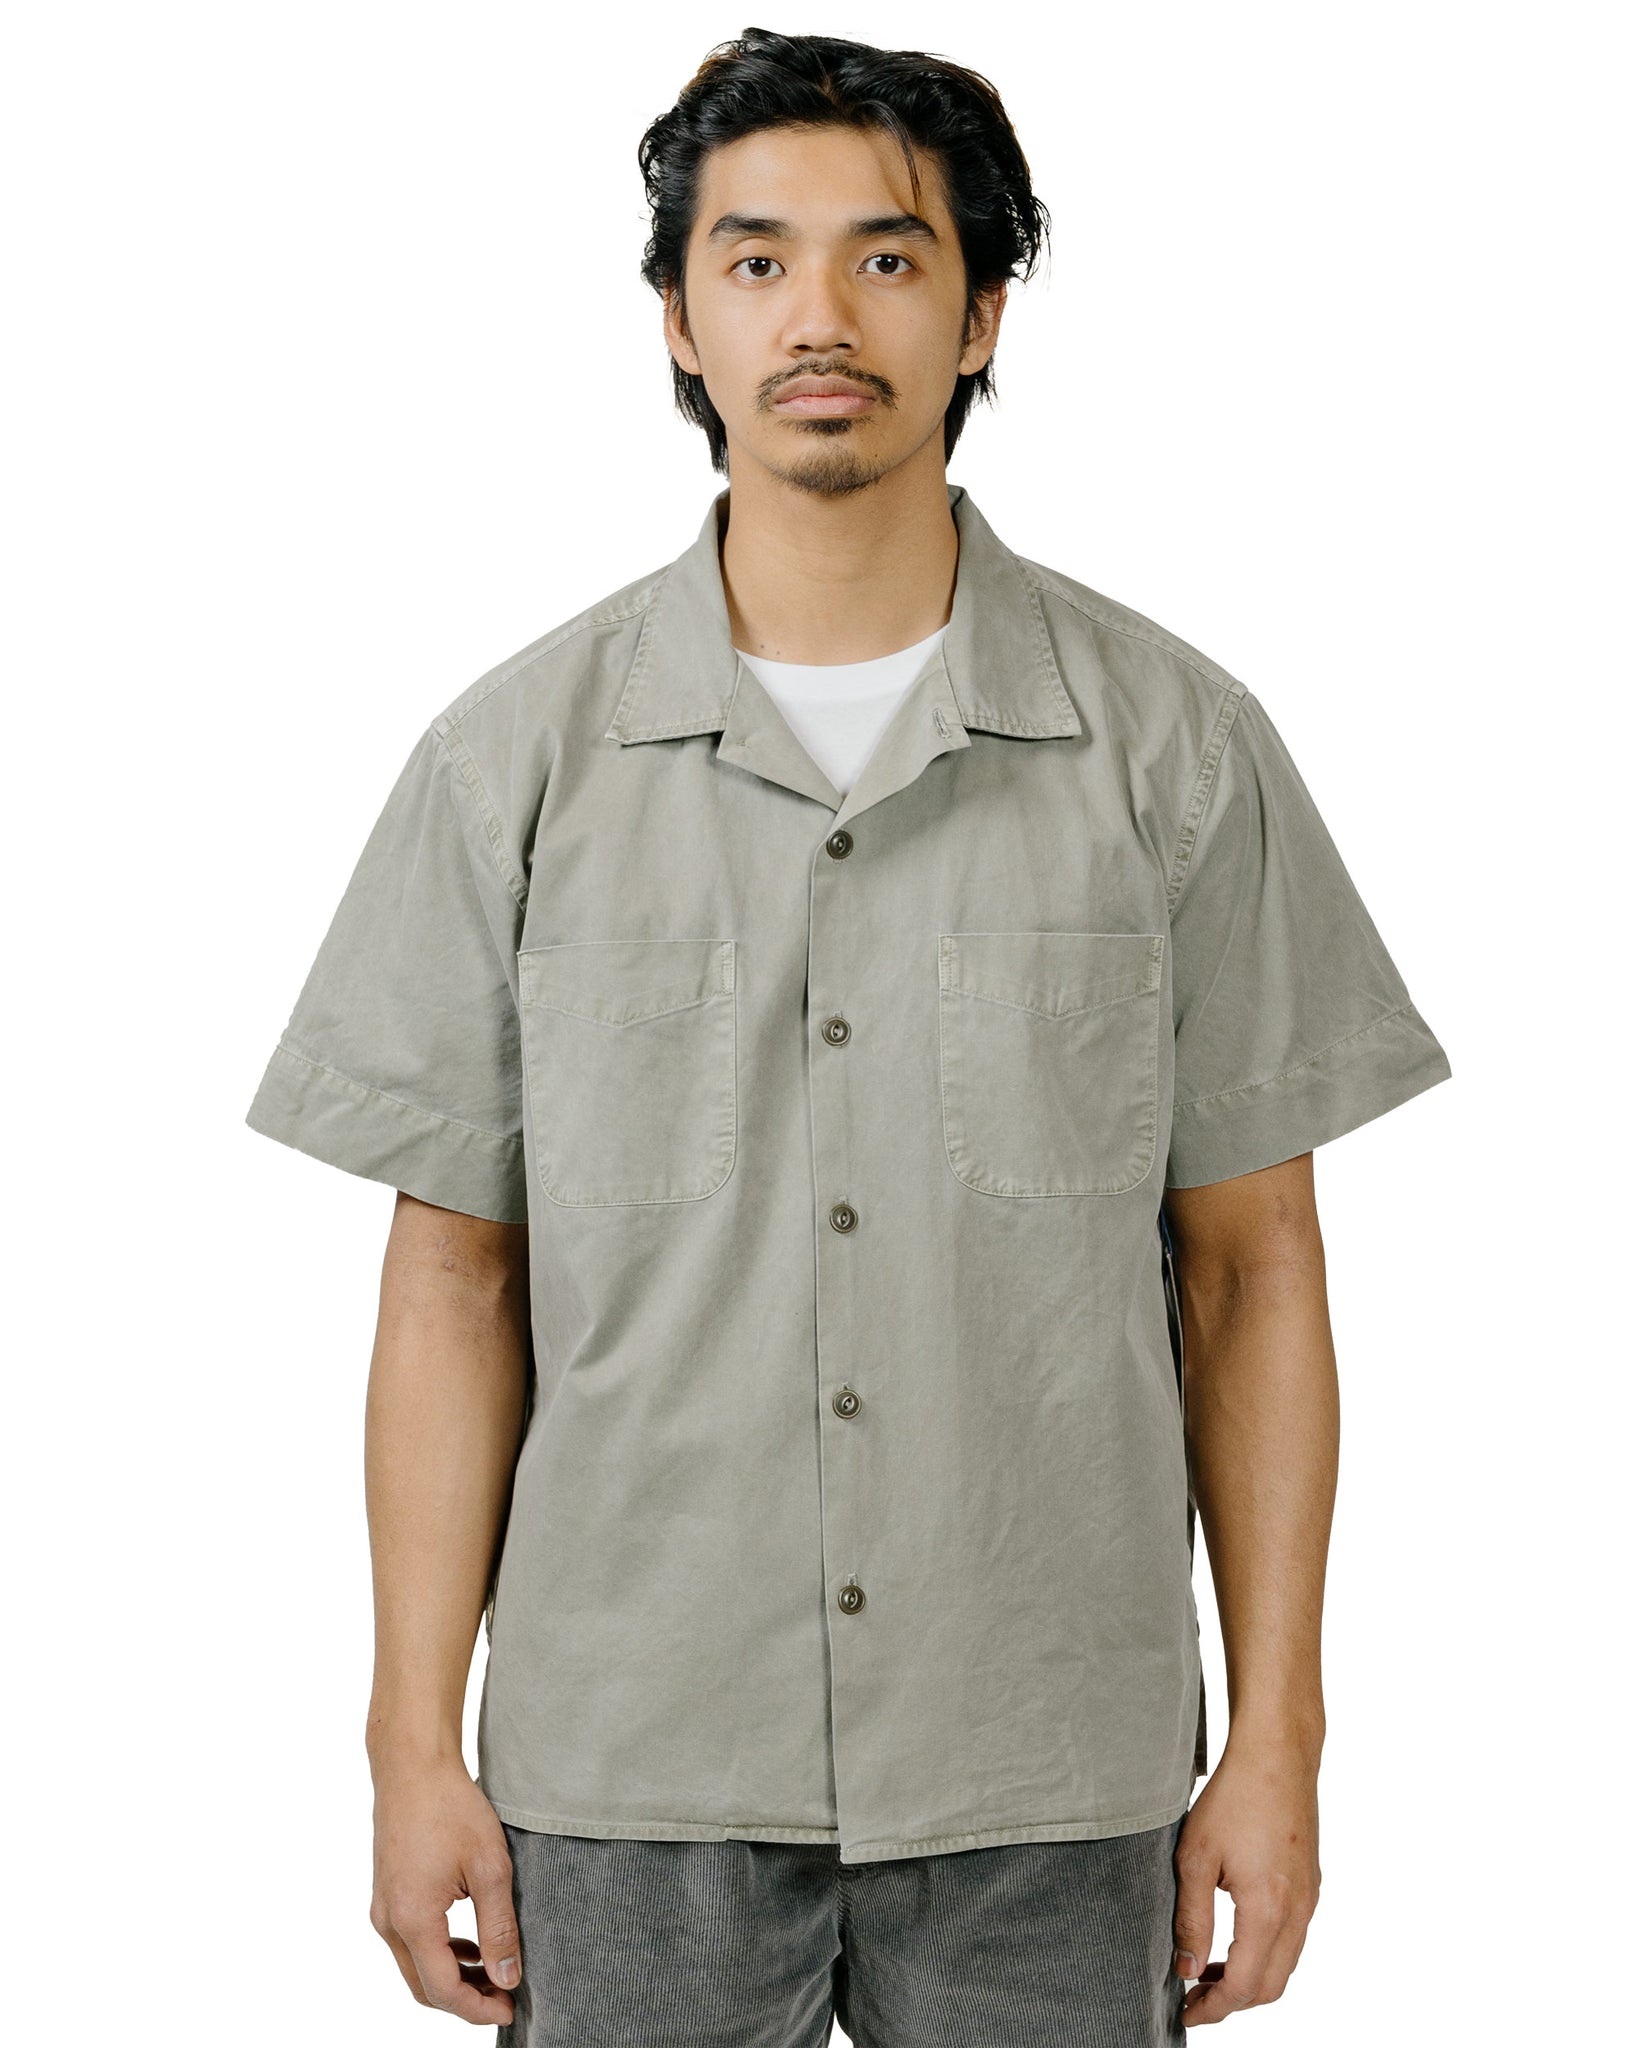 Save Khaki United SS Camp Shirt Olive model front